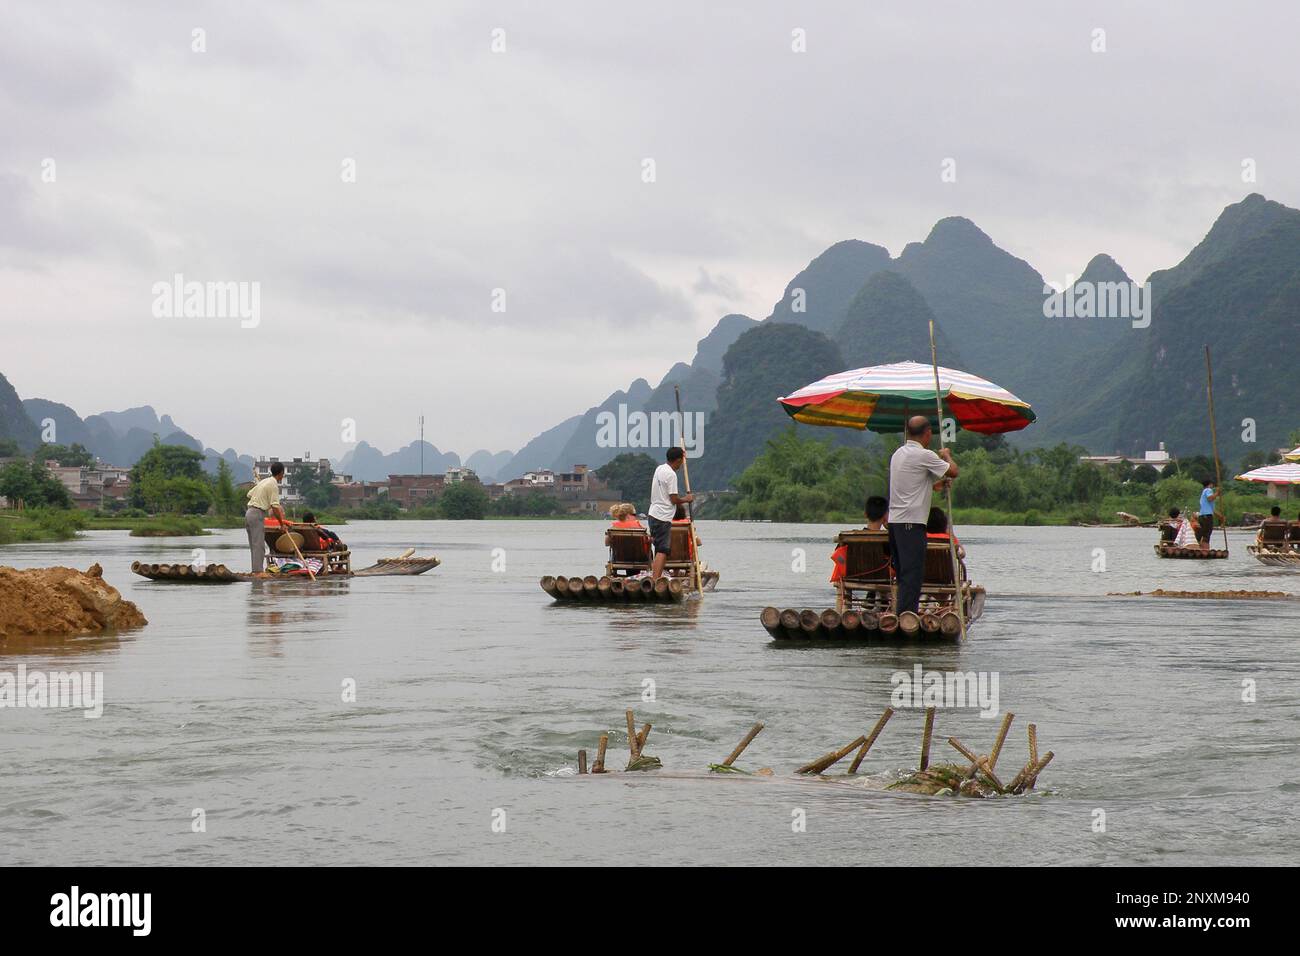 Schifffahrt auf dem Fluss, Yangshuo Fluss, Guangxi Region, Guilin, China Stockfoto